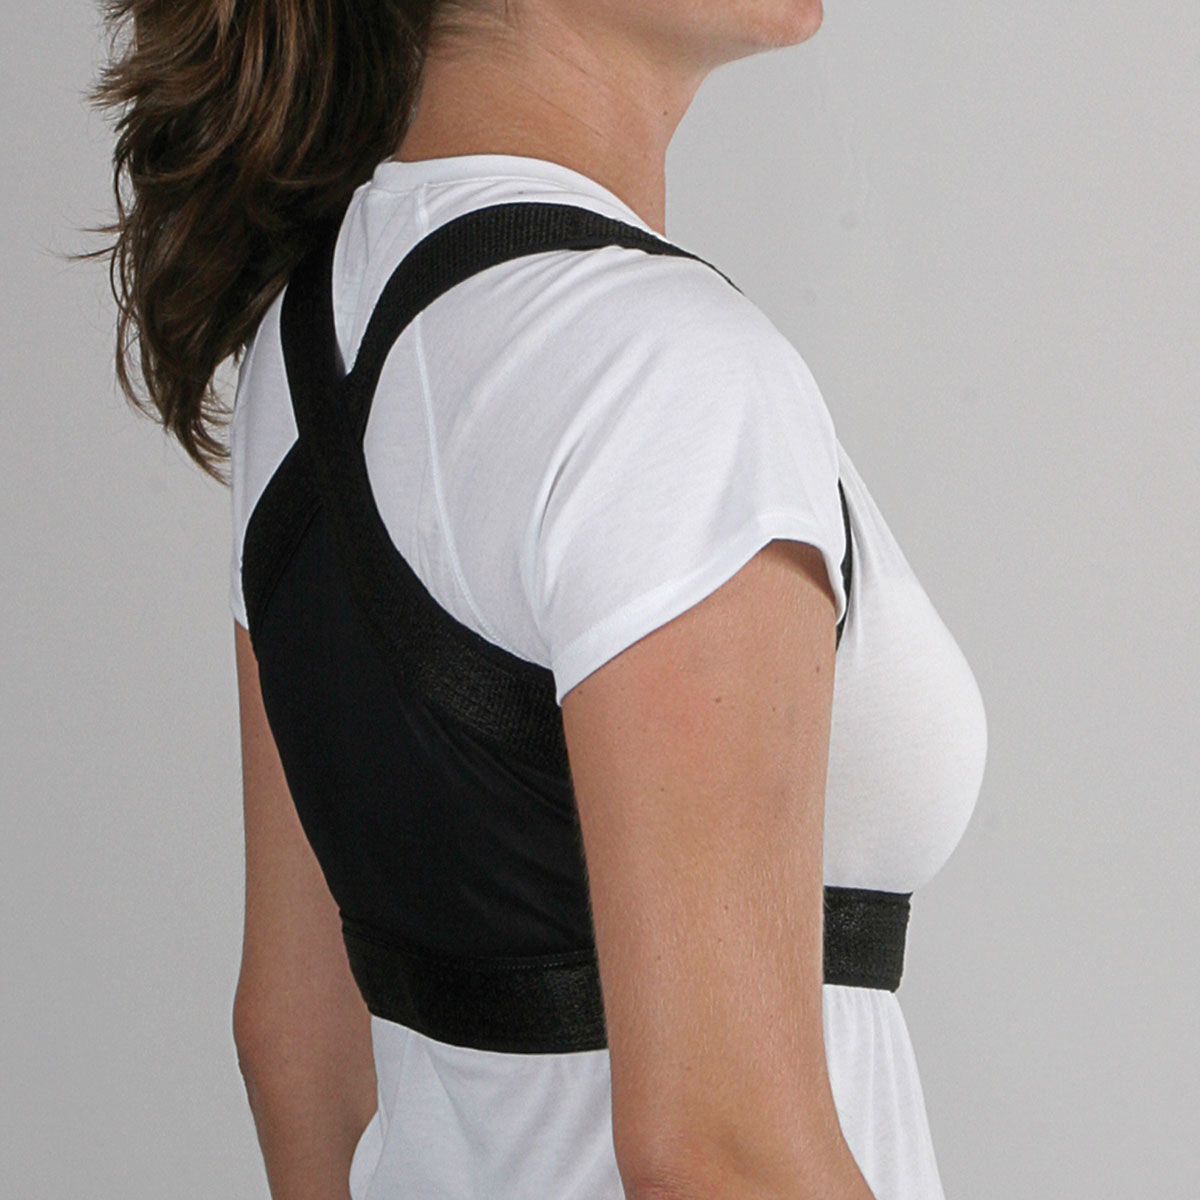 Details about   EquiFit Shouldersback LITE for Kids Posture Corrector Black & White NWT 